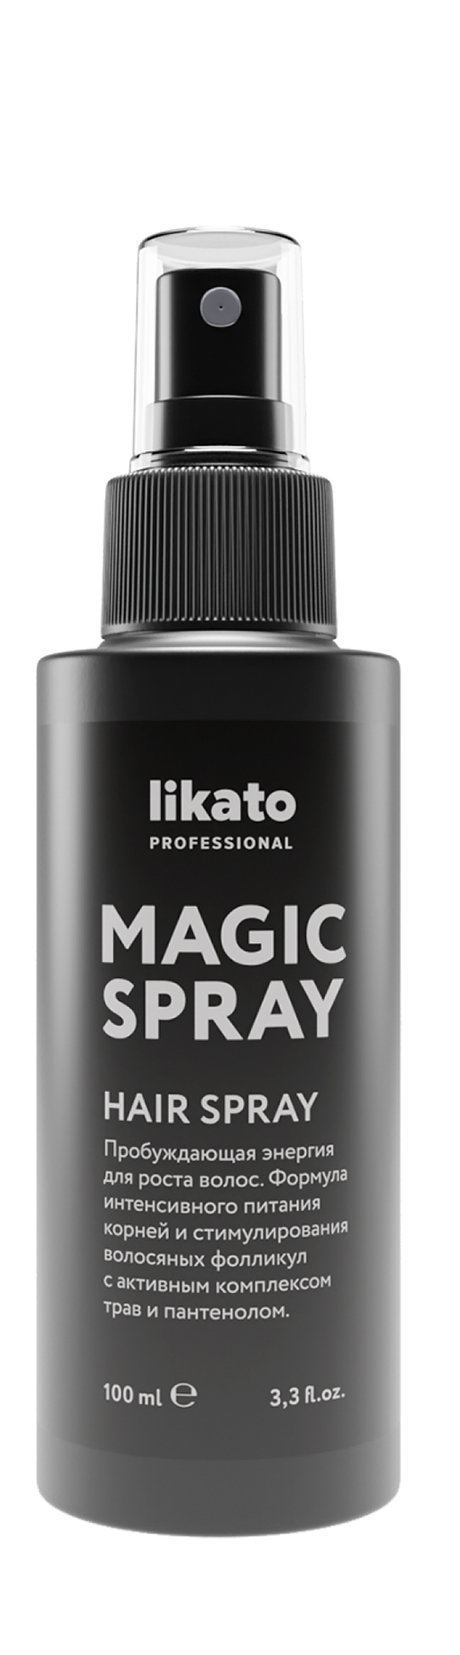 likato professional magic spray hair spray